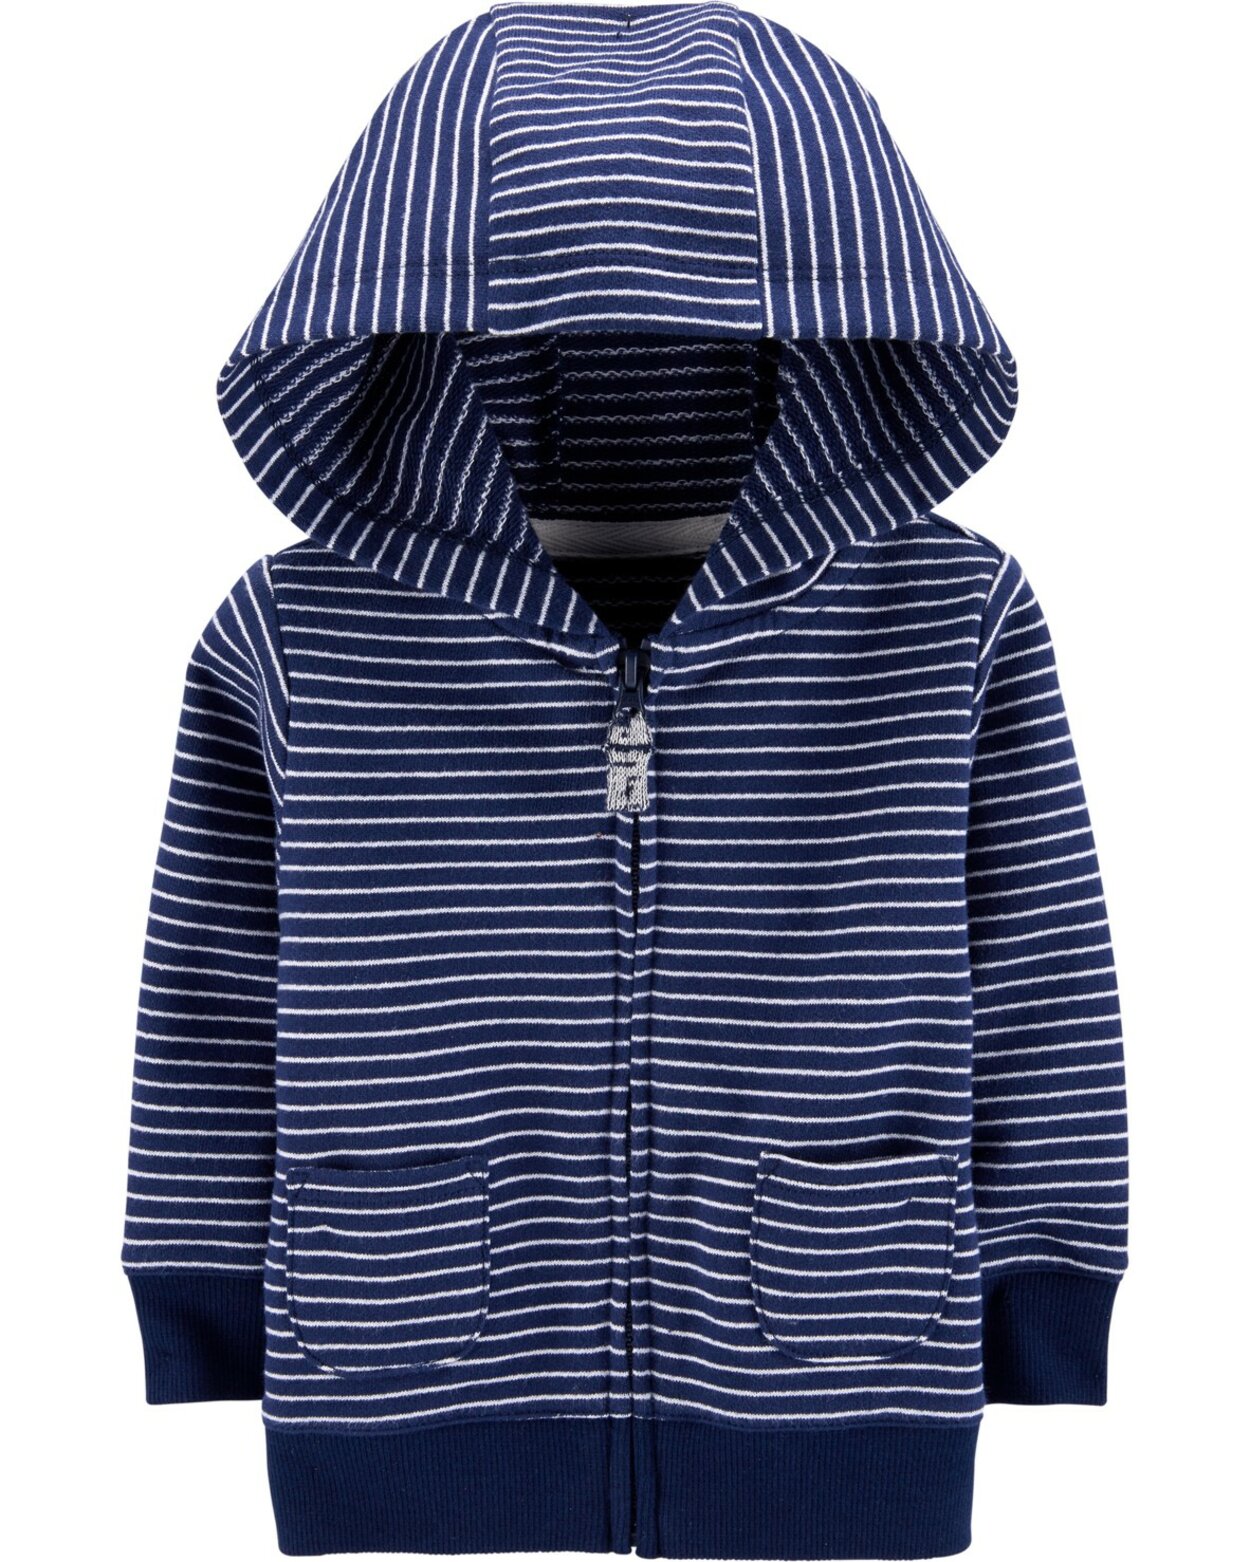 CARTER'S Mikina na zips s kapucňou Strips Blue chlapec 6 m /veľ. 68 |  Predeti.sk